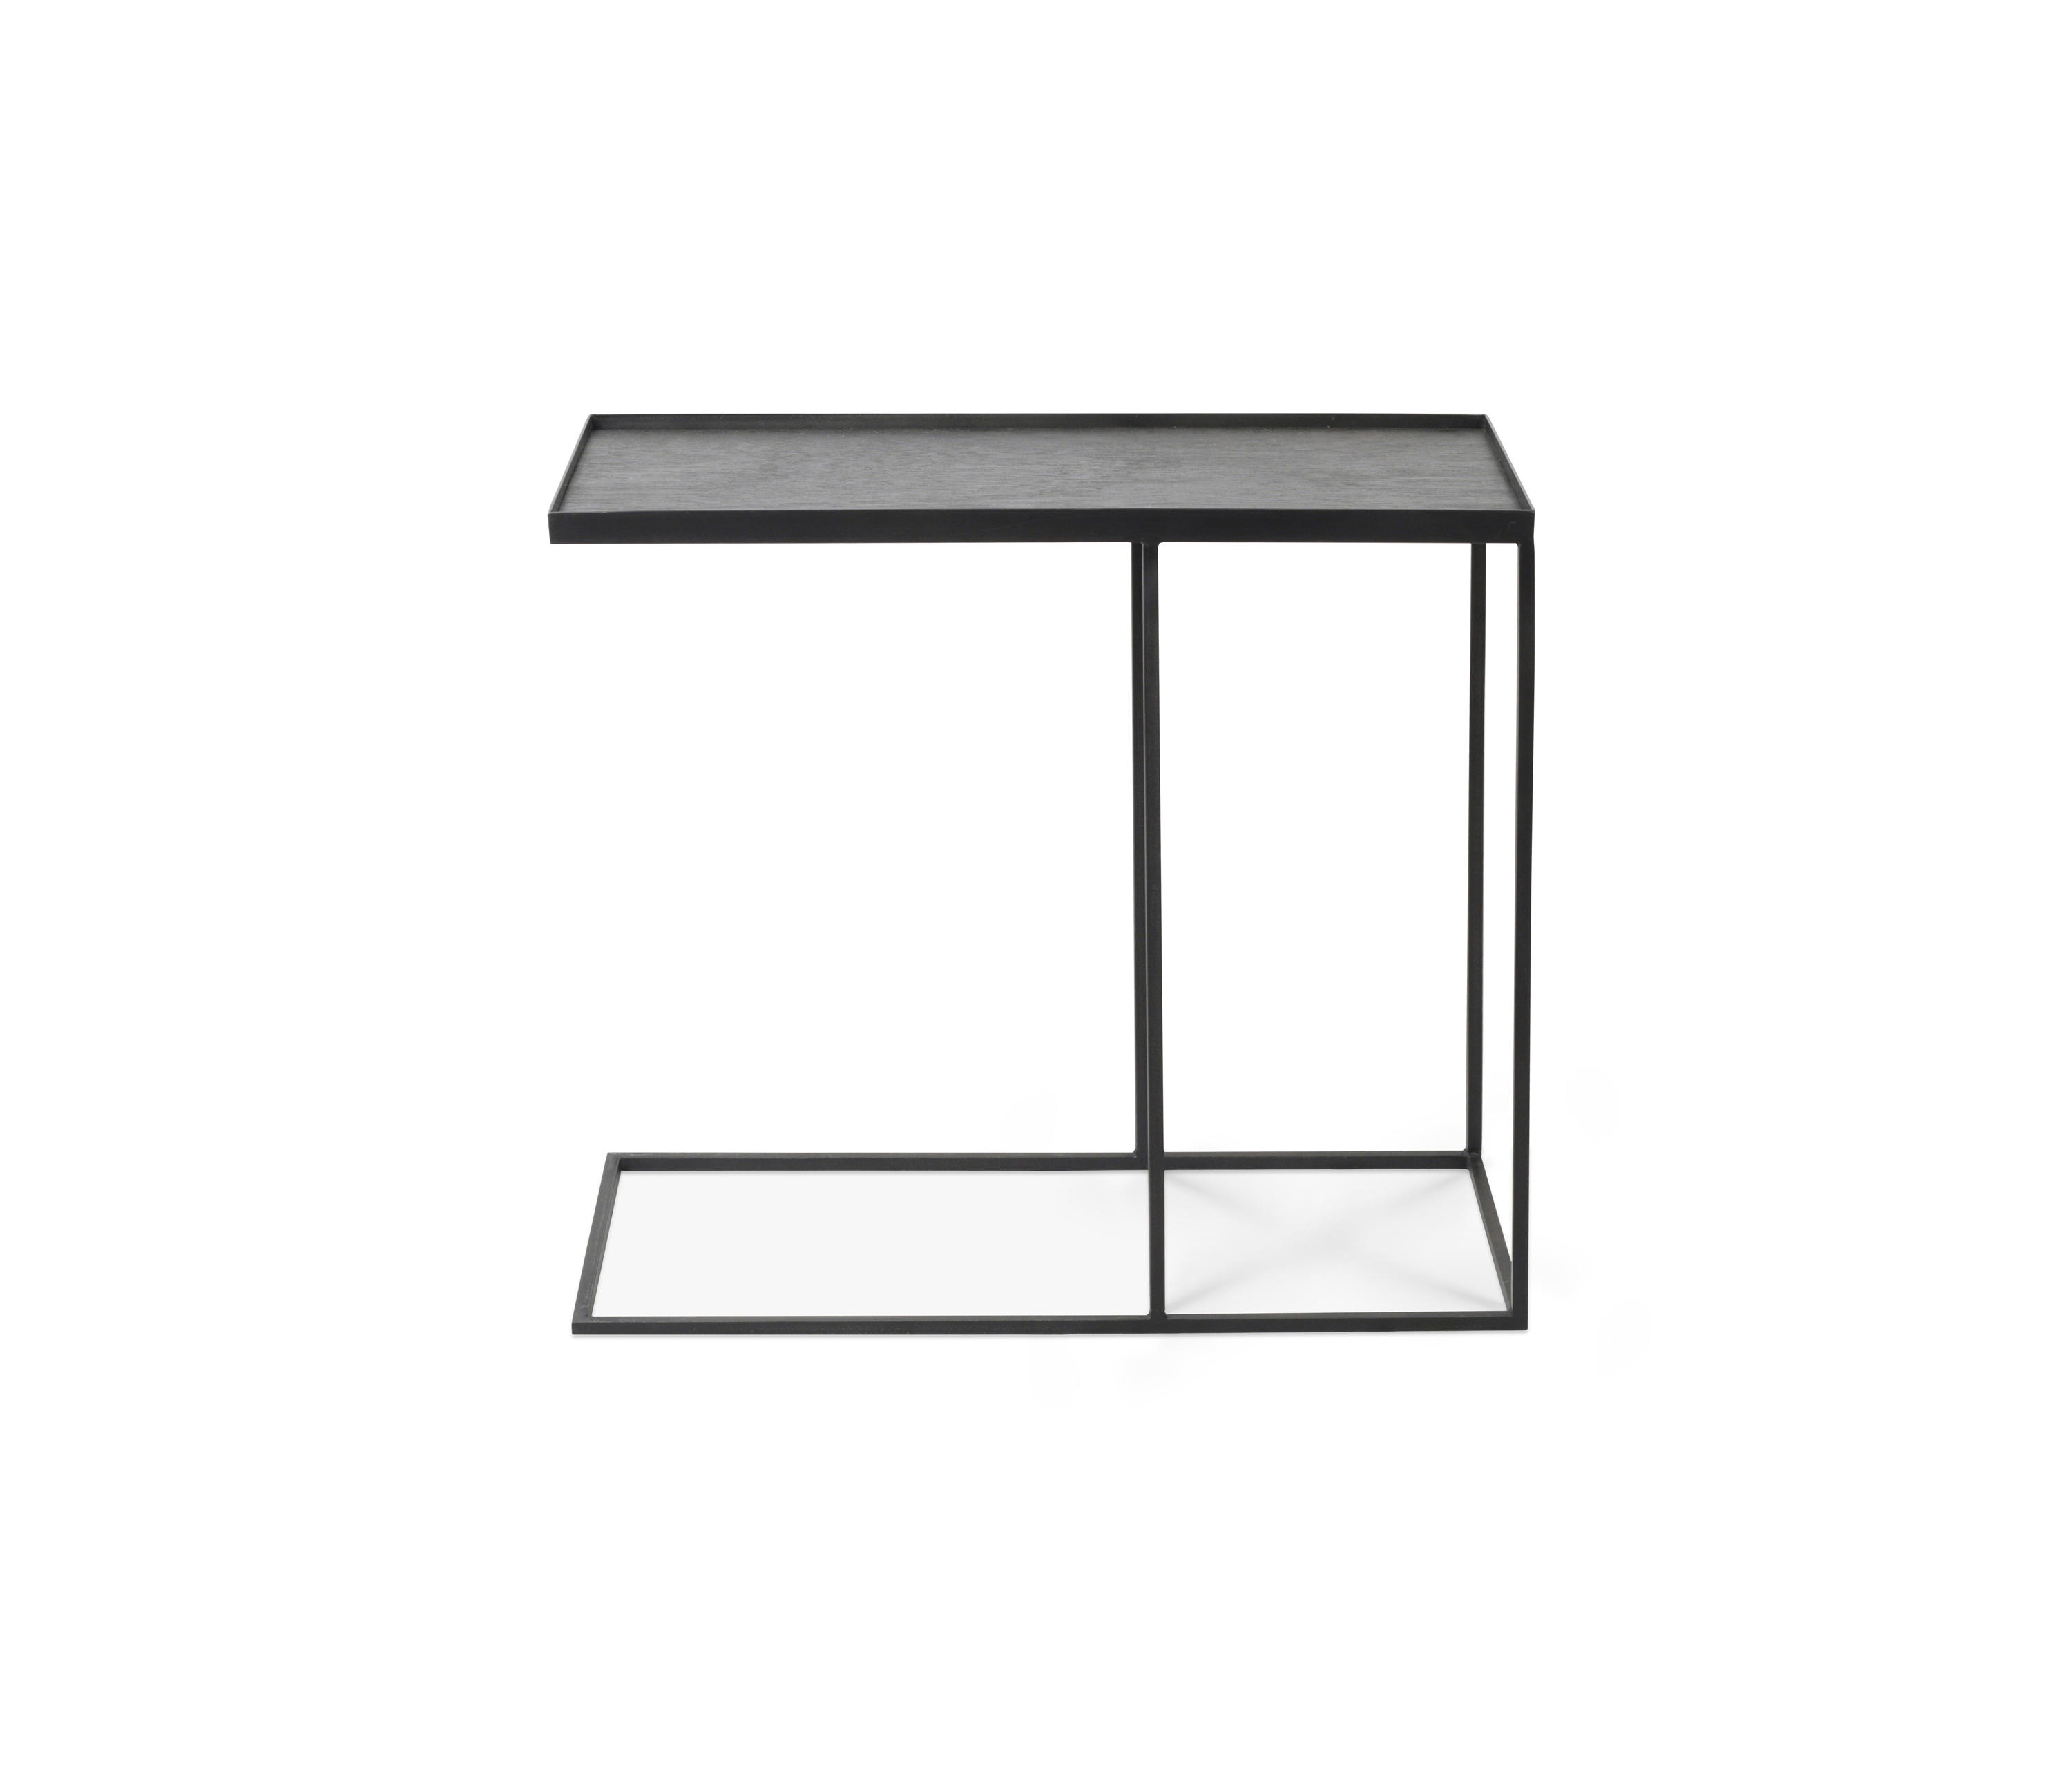 stilte door elkaar haspelen Voel me slecht Tray tables | Rectangular tray side table - M (tray not included) |  Architonic